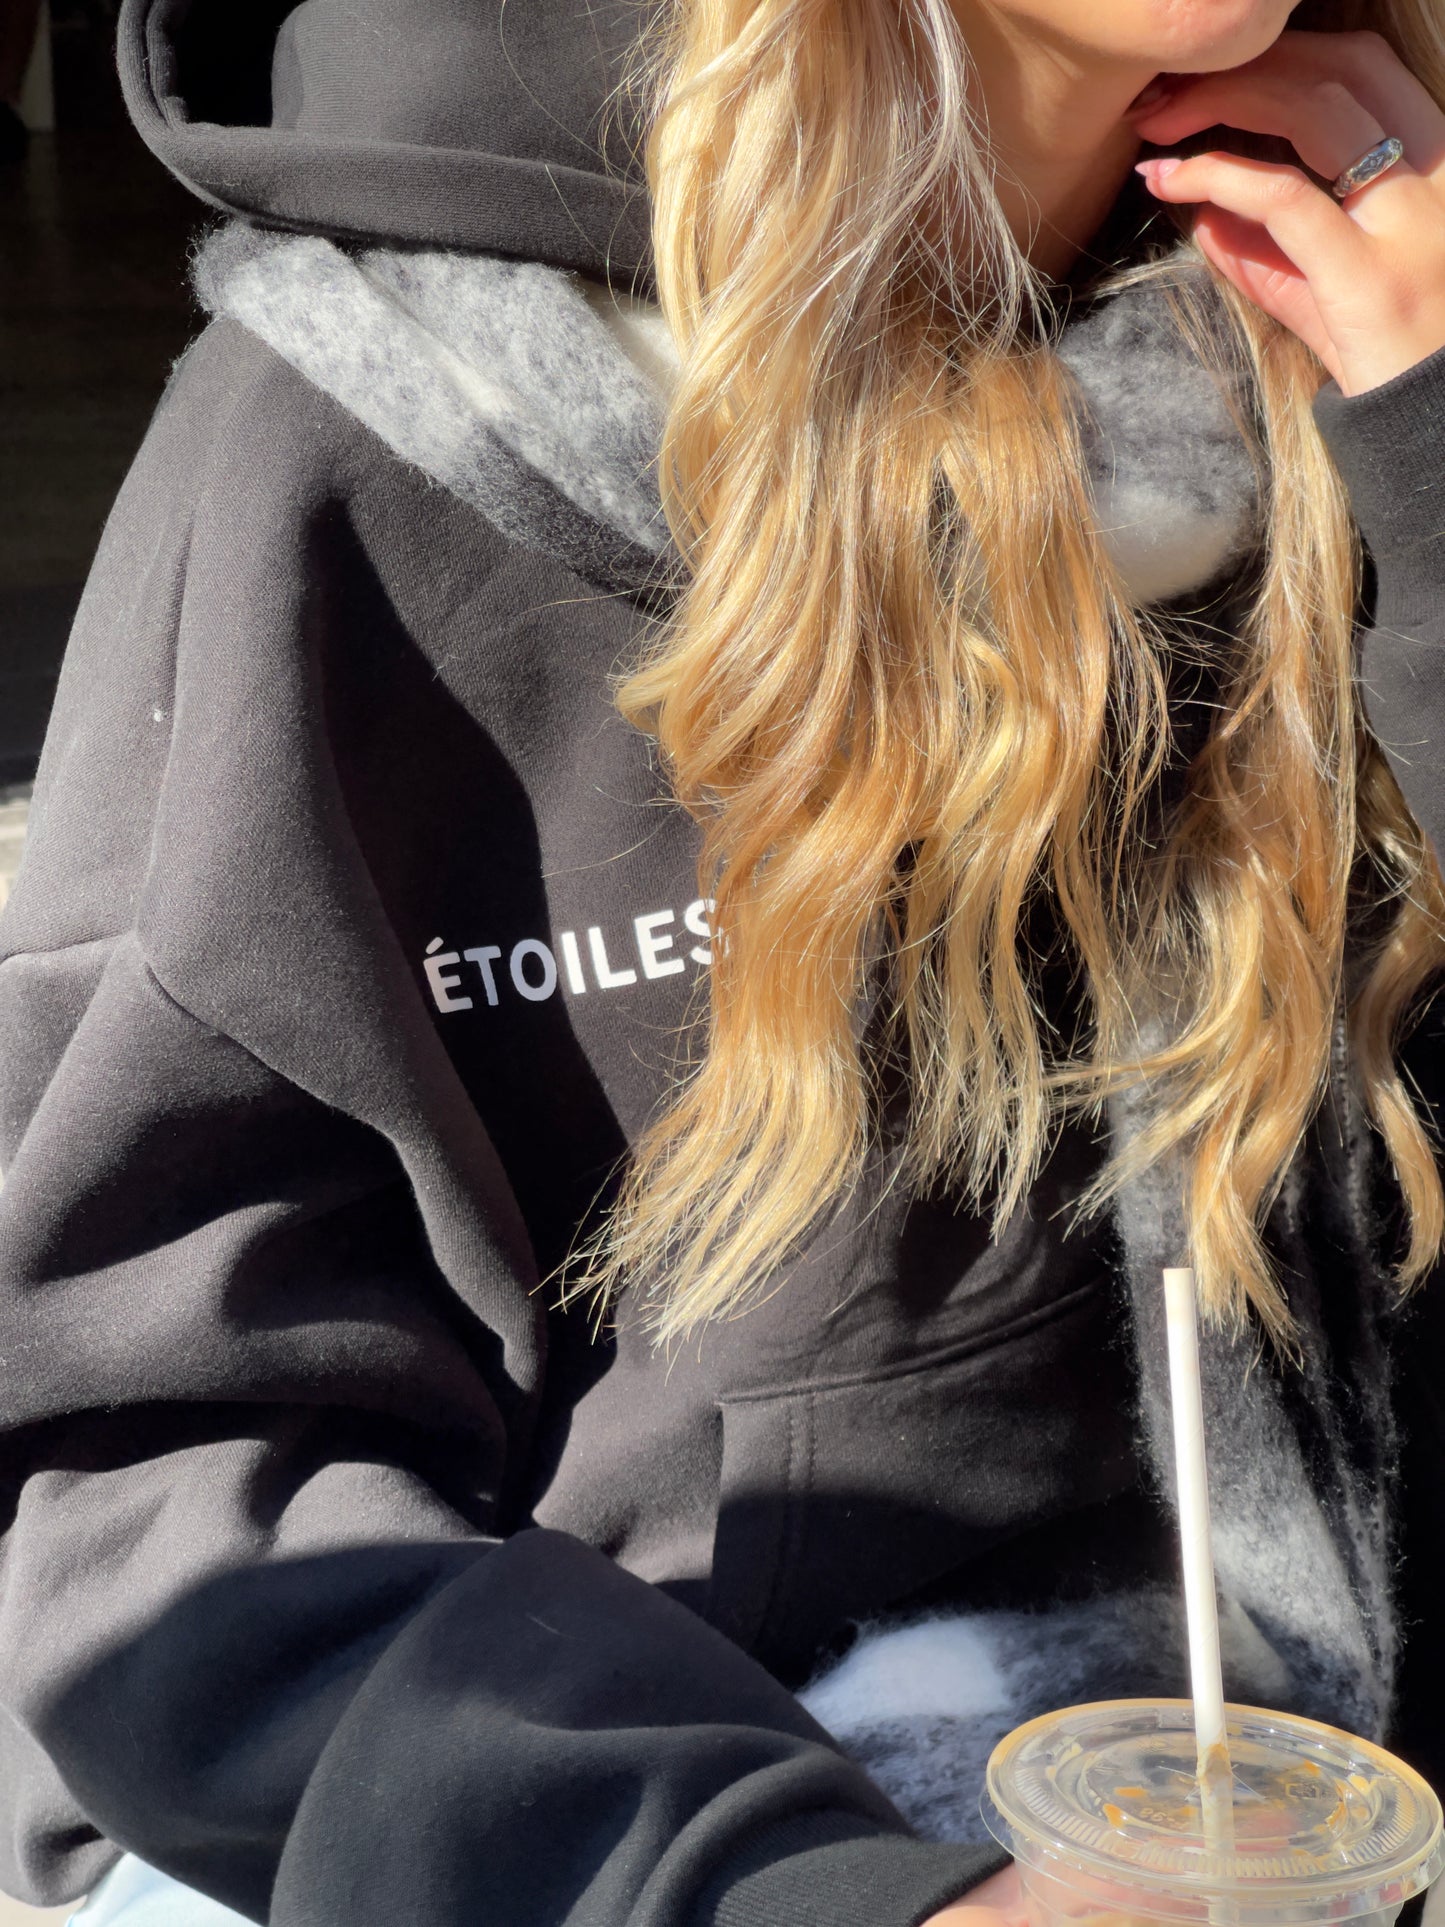 Etoiles boxy hoodie